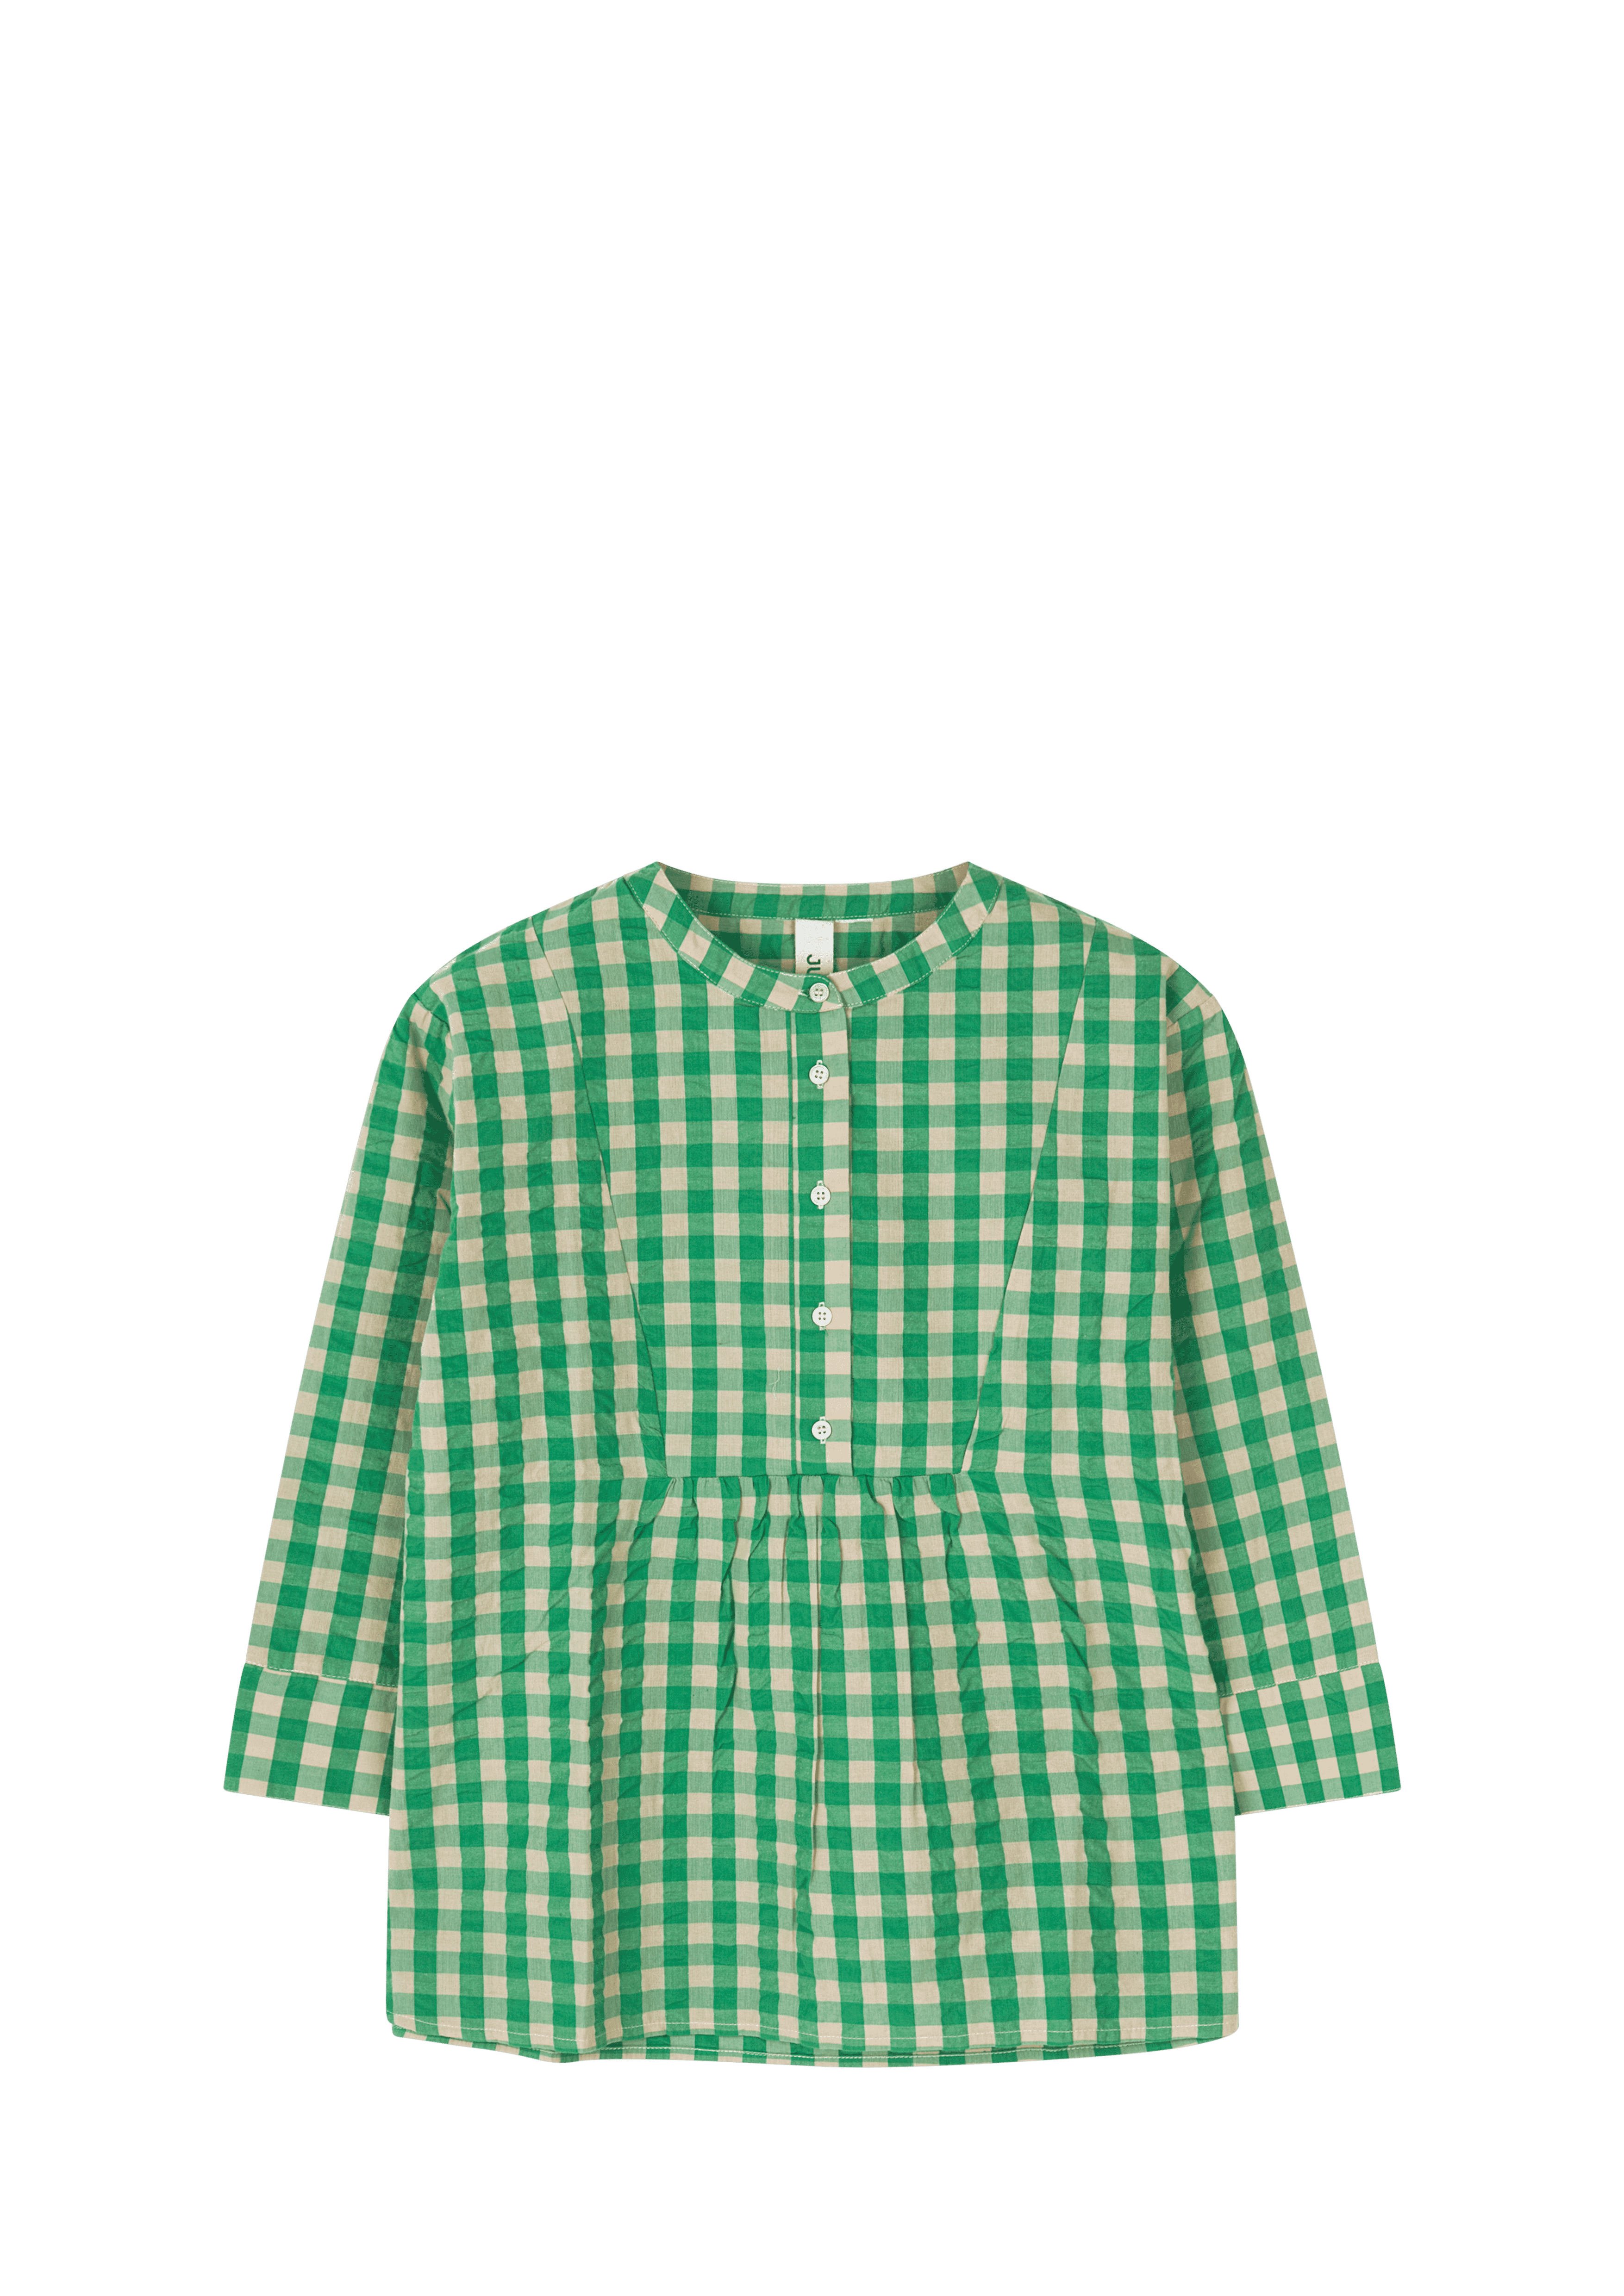 Irene shirt M/L